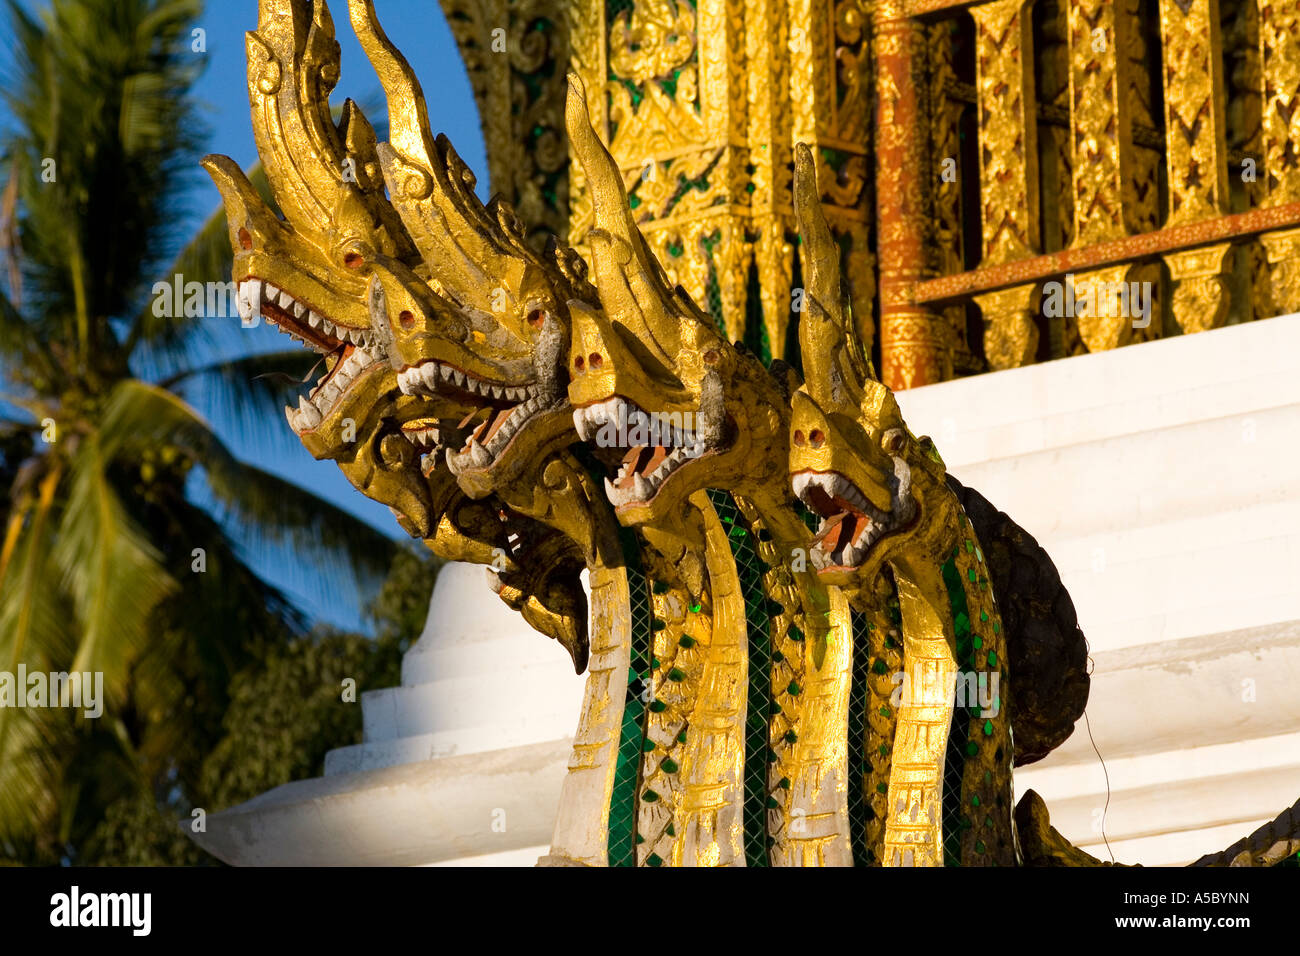 Sala Pha Bang Tempel Teil des königlichen Palastes National Museum Luang Prabang Laos Stockfoto